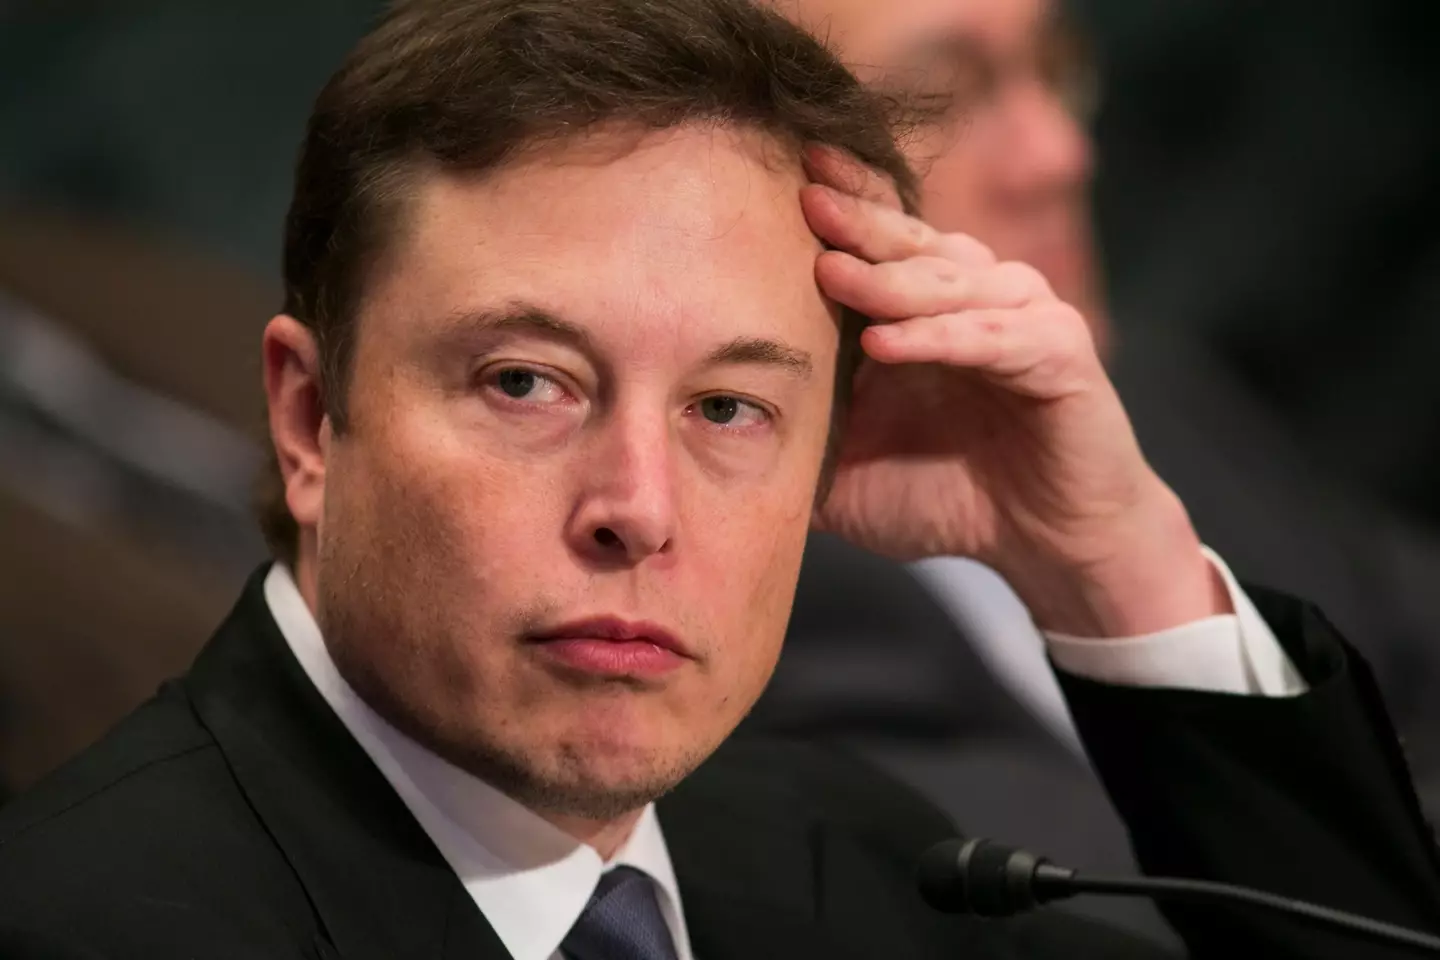 "Oh no, my money!" - Elon Musk, probably.